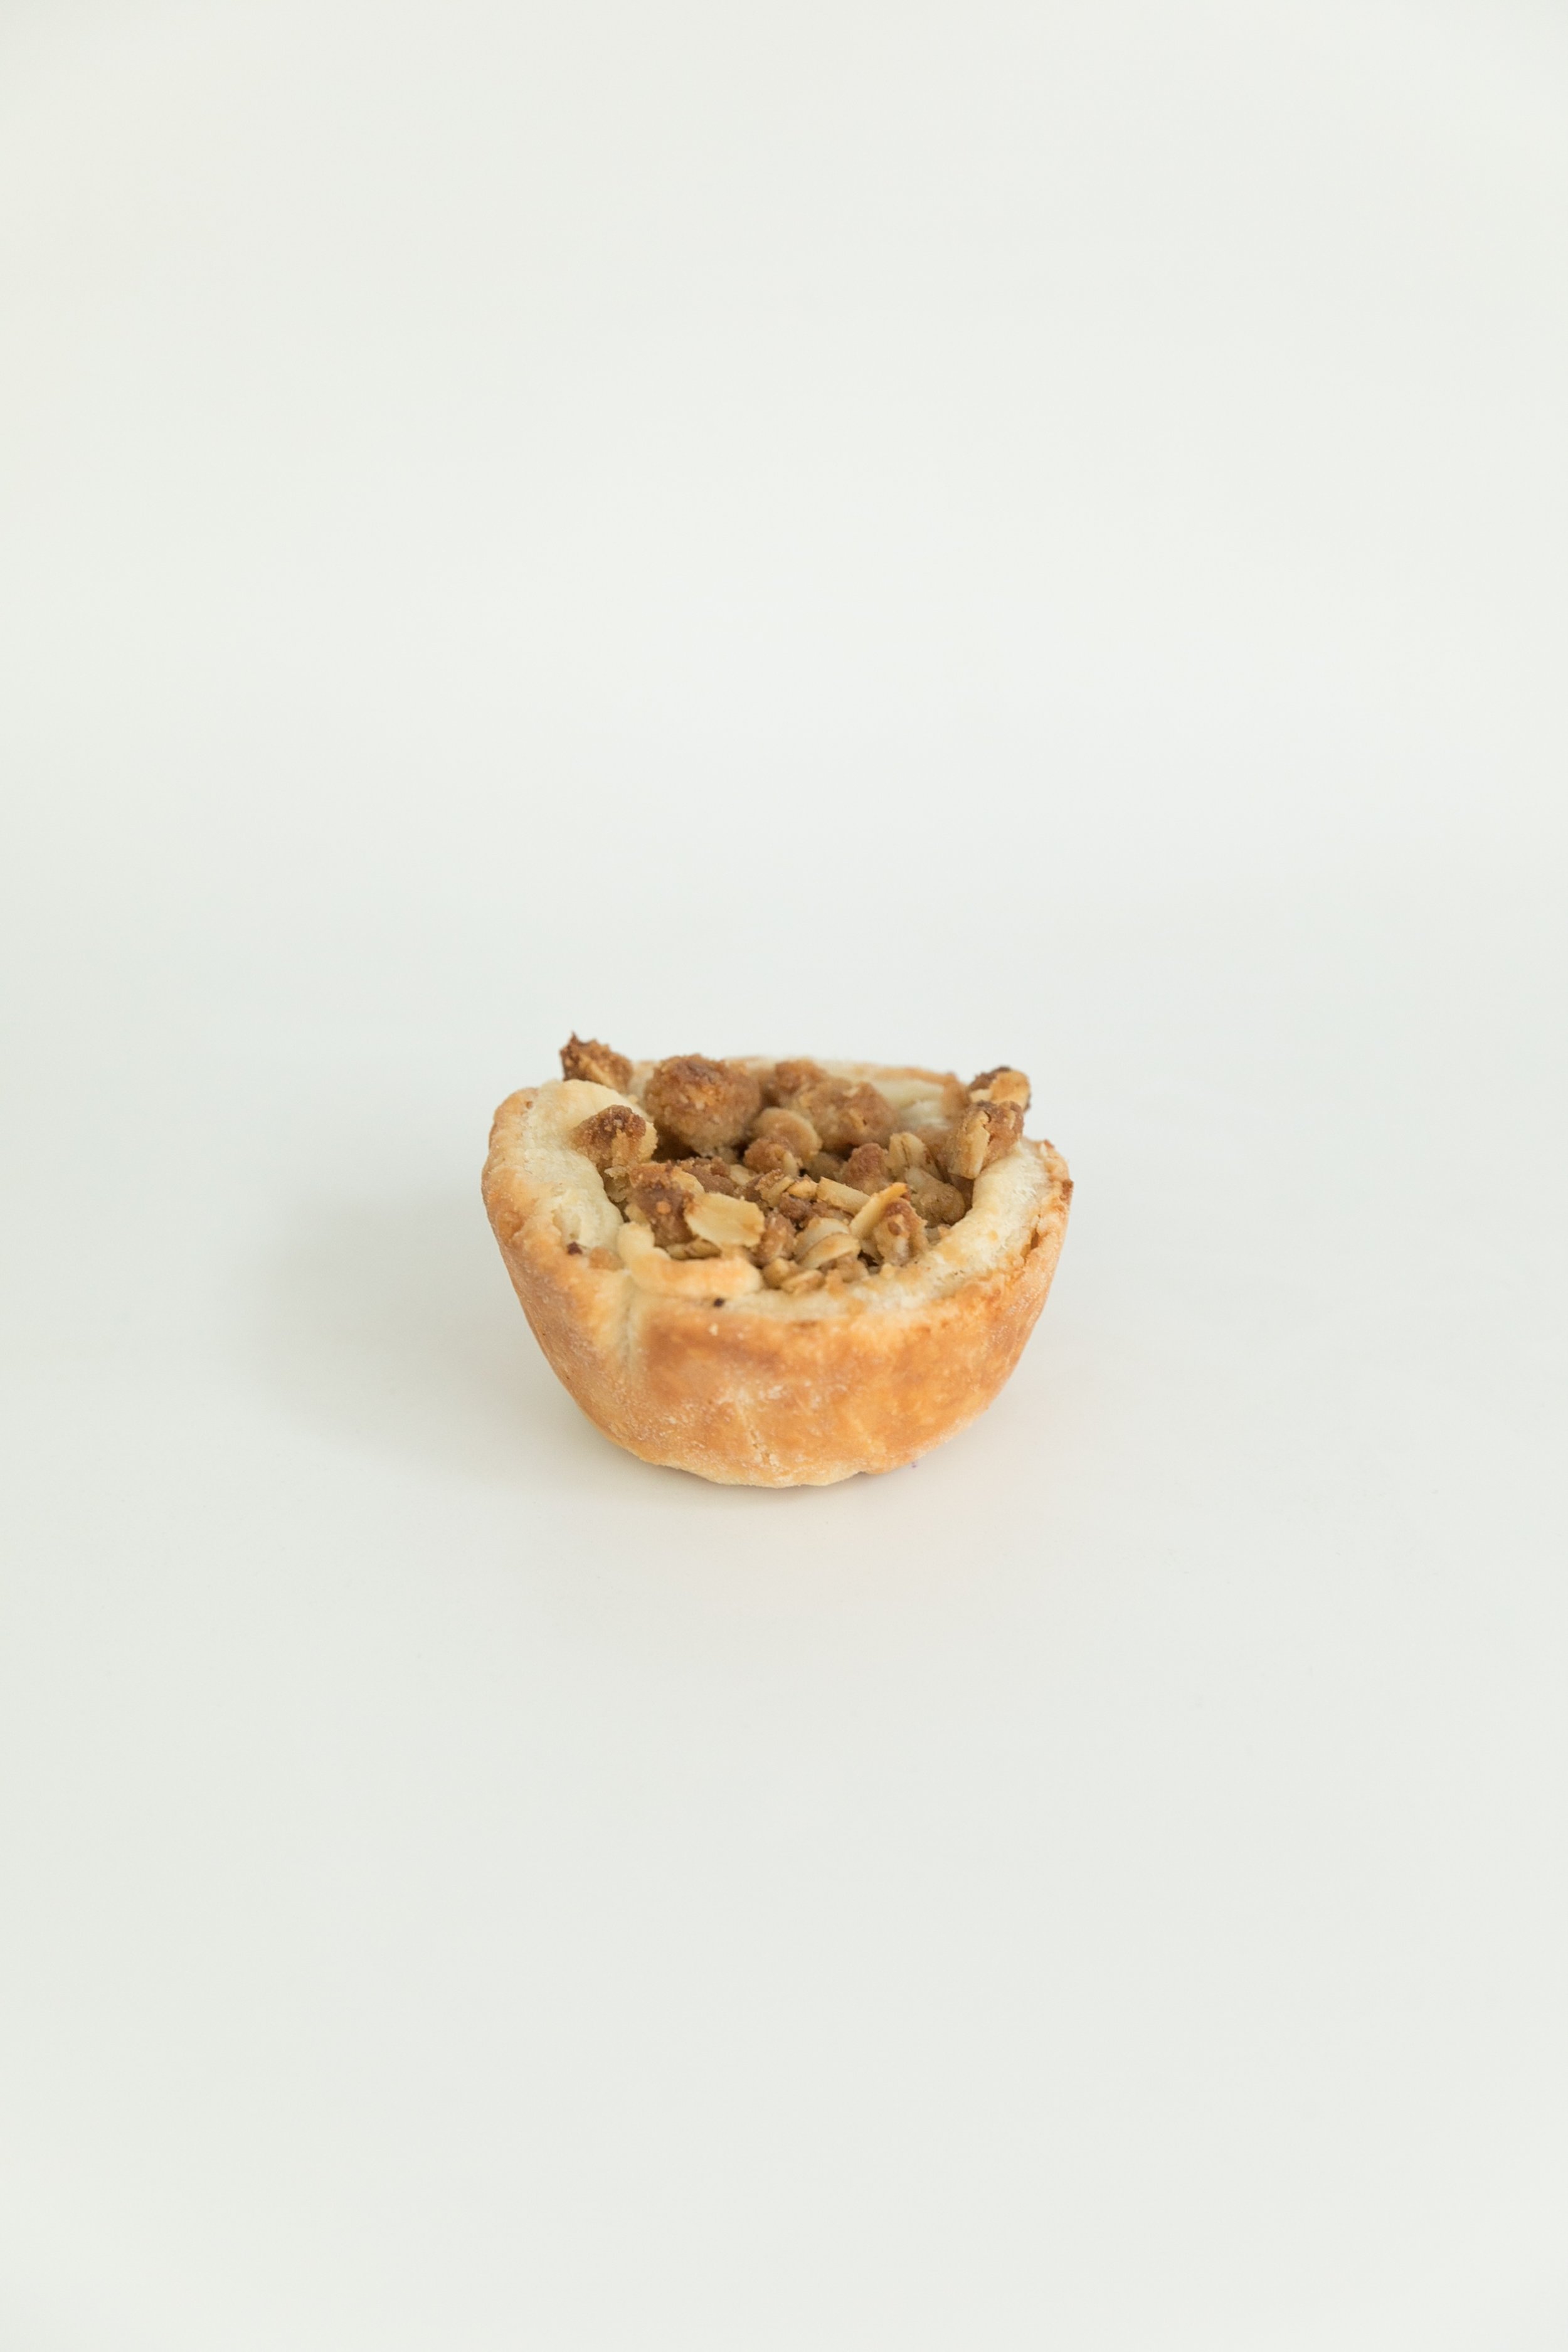  Mini dutch apple pie with brown sugar crumb topping 